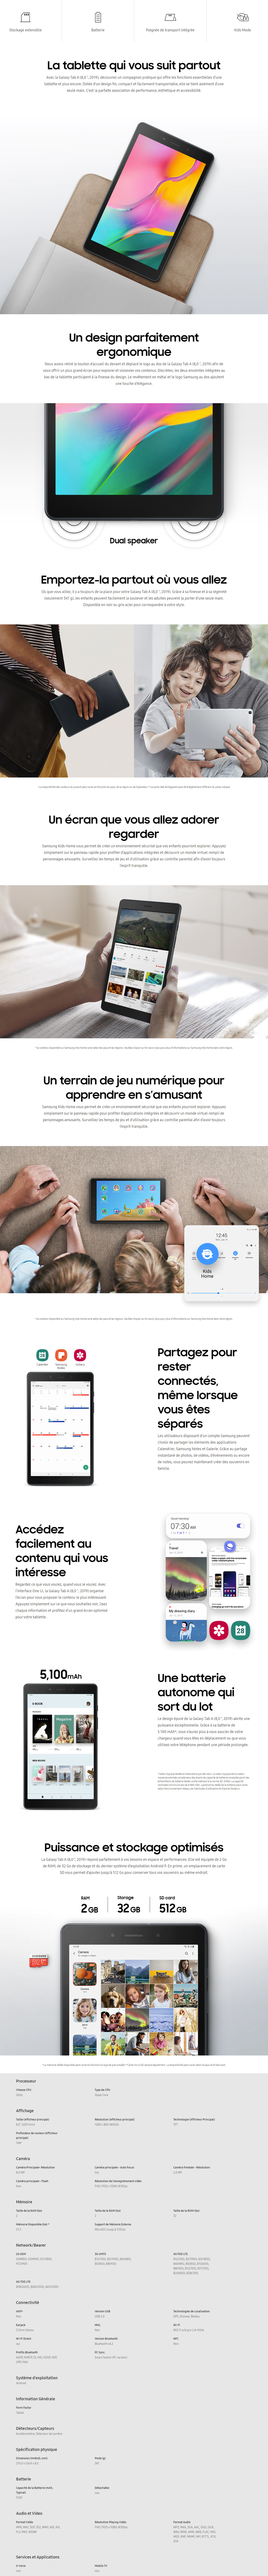 Galaxy tab A (8 pouces 2019), Tablettes à Rabat